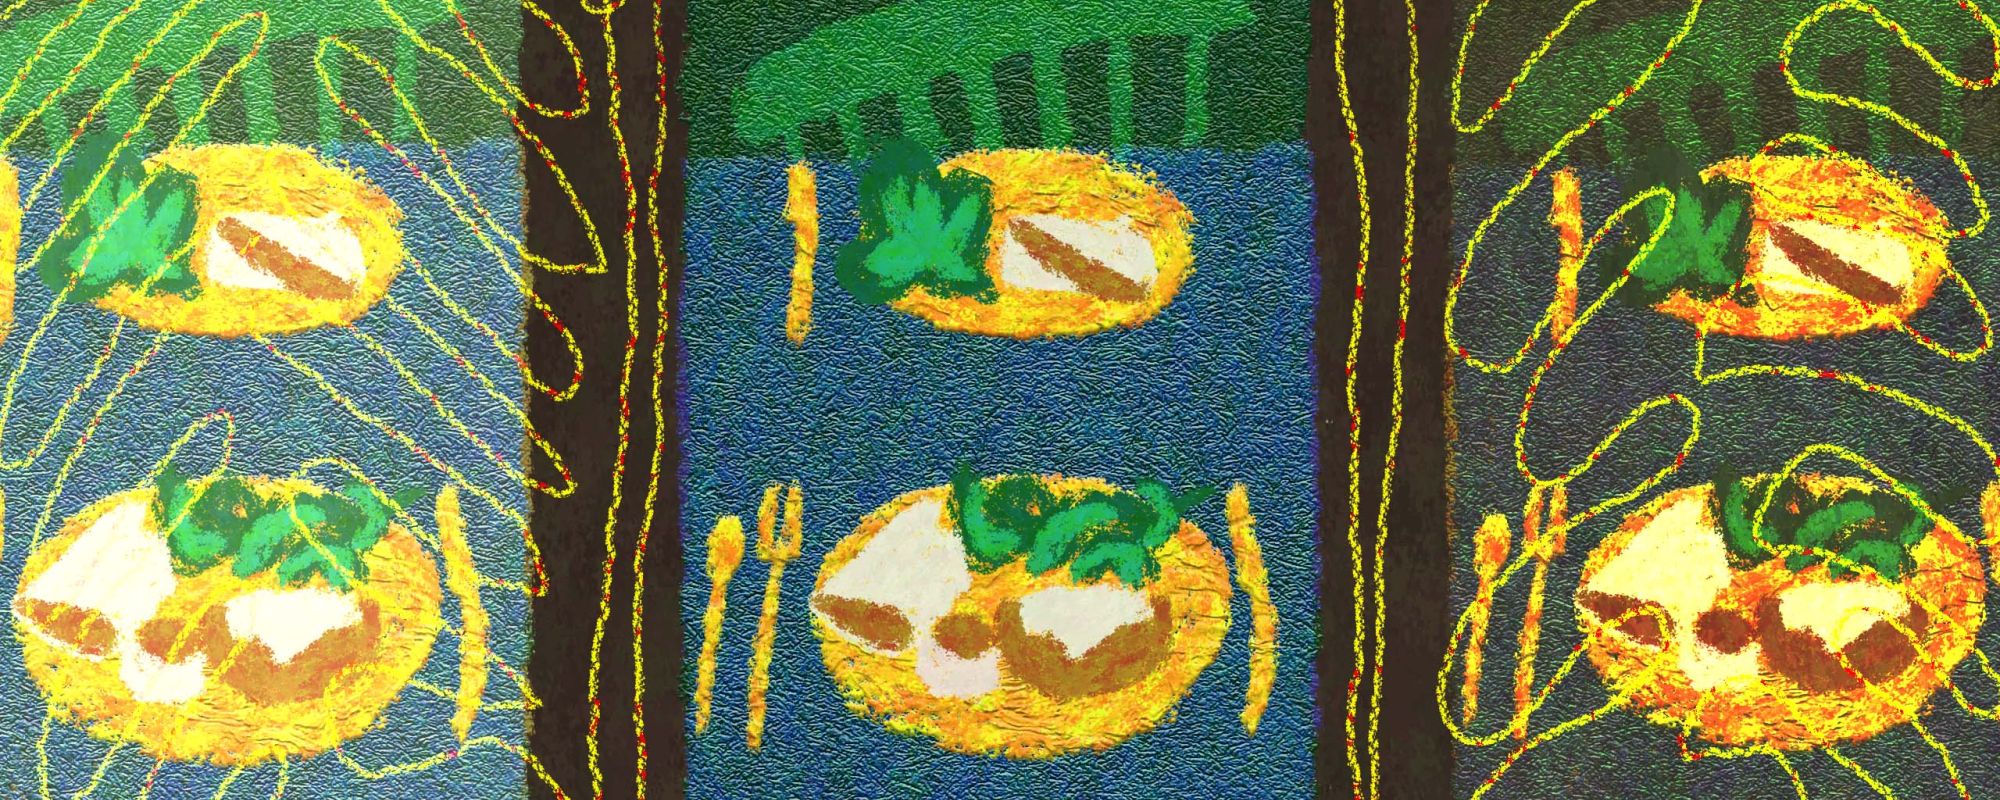 three plates of food on green plates